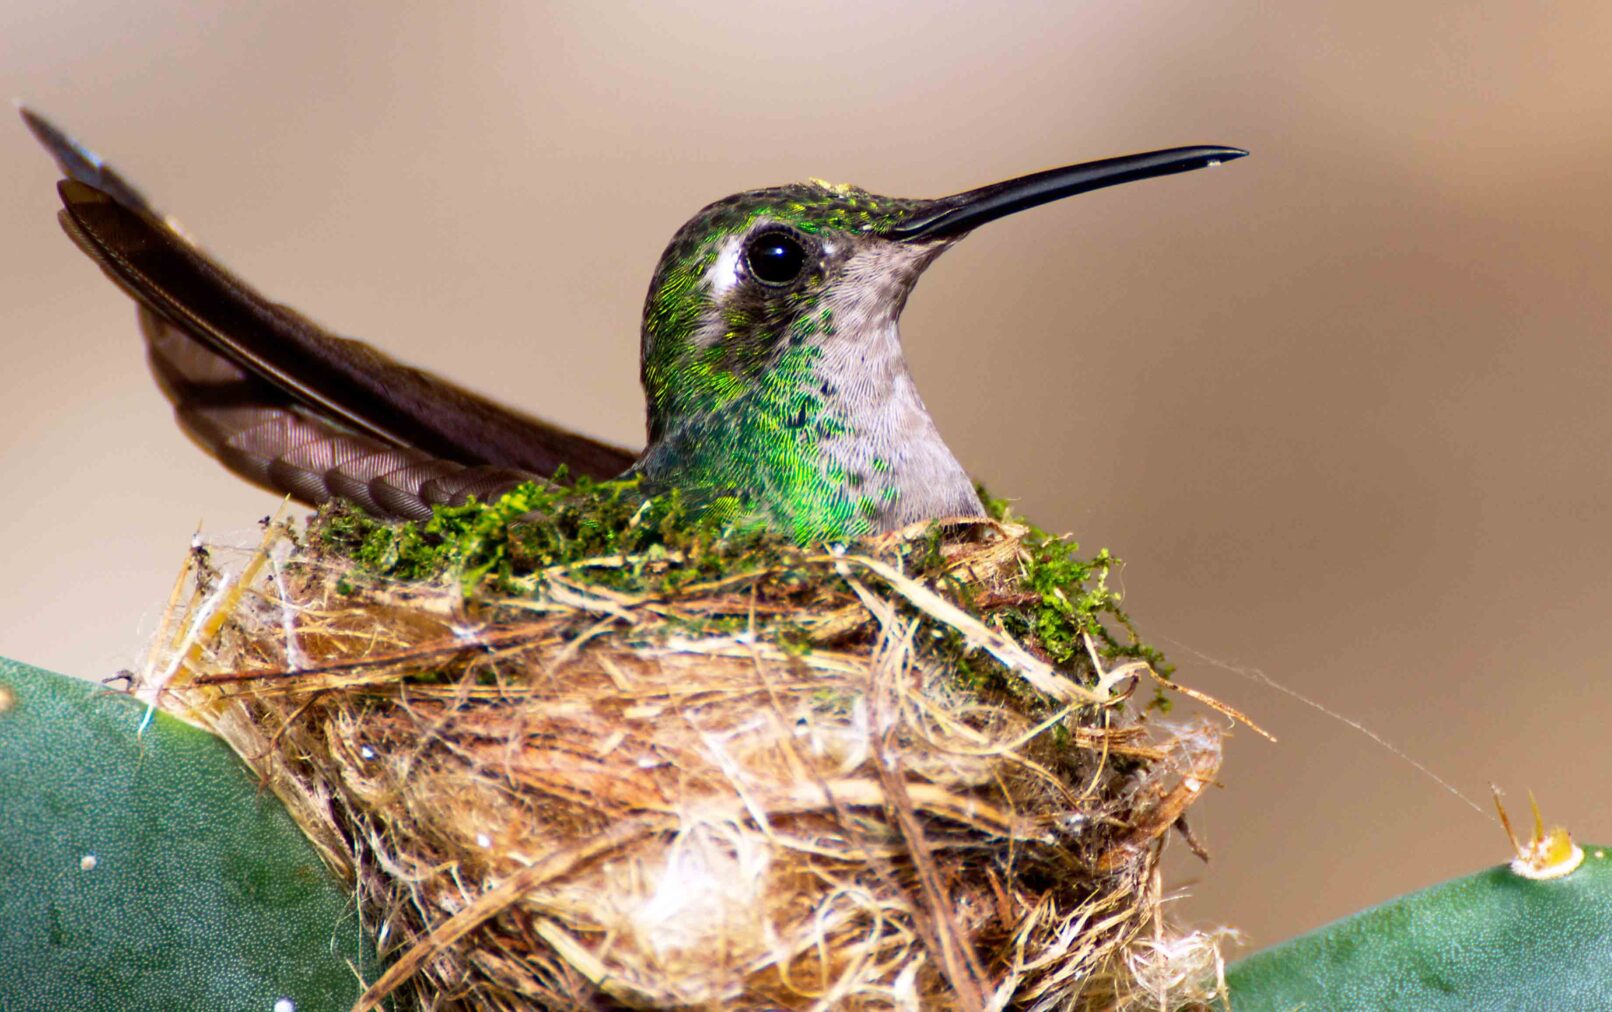 A Green Hummingbird sitting on its nest